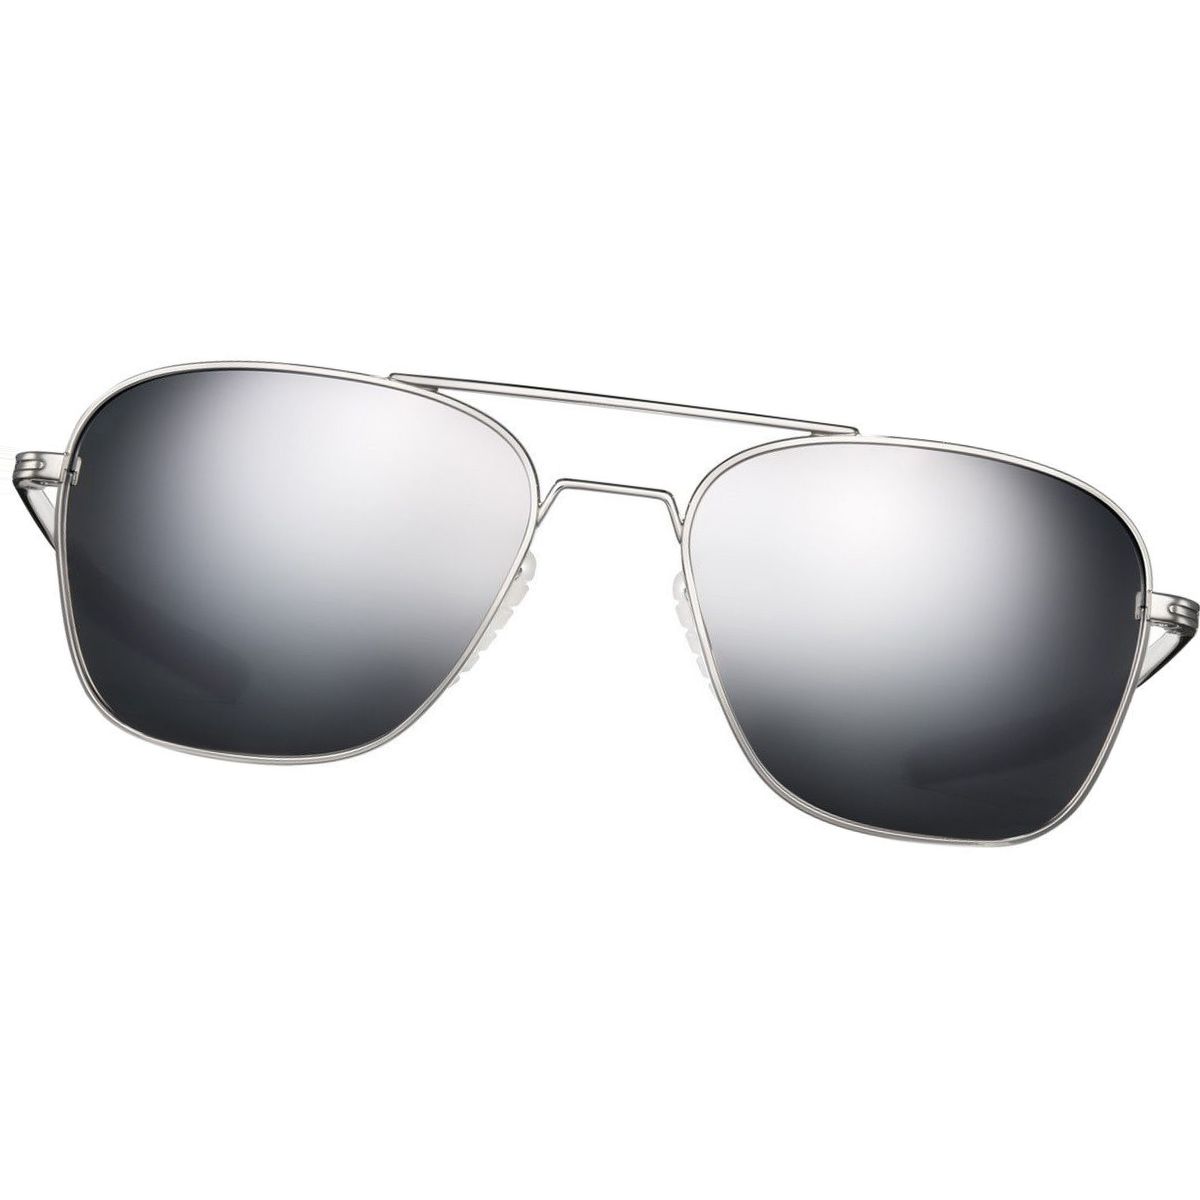 Roka Falcon Titanium Sunglasses - Women's